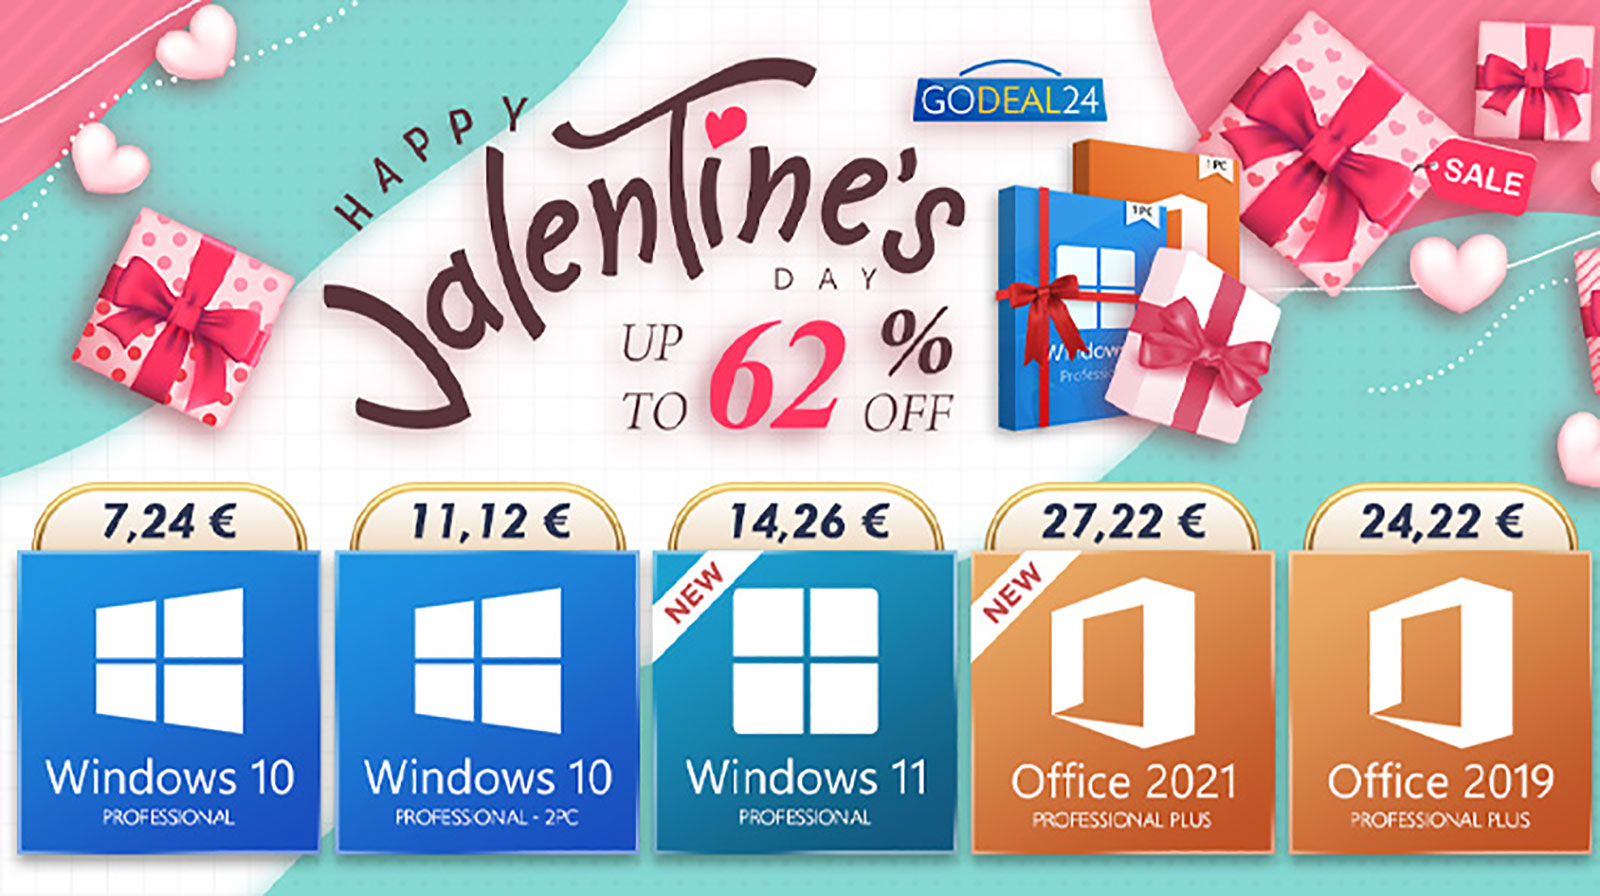 Windows δωρεάν, Valentine’s Day Sale: Αποκτήστε Office 2021 και Windows 11 σε ειδική τιμή